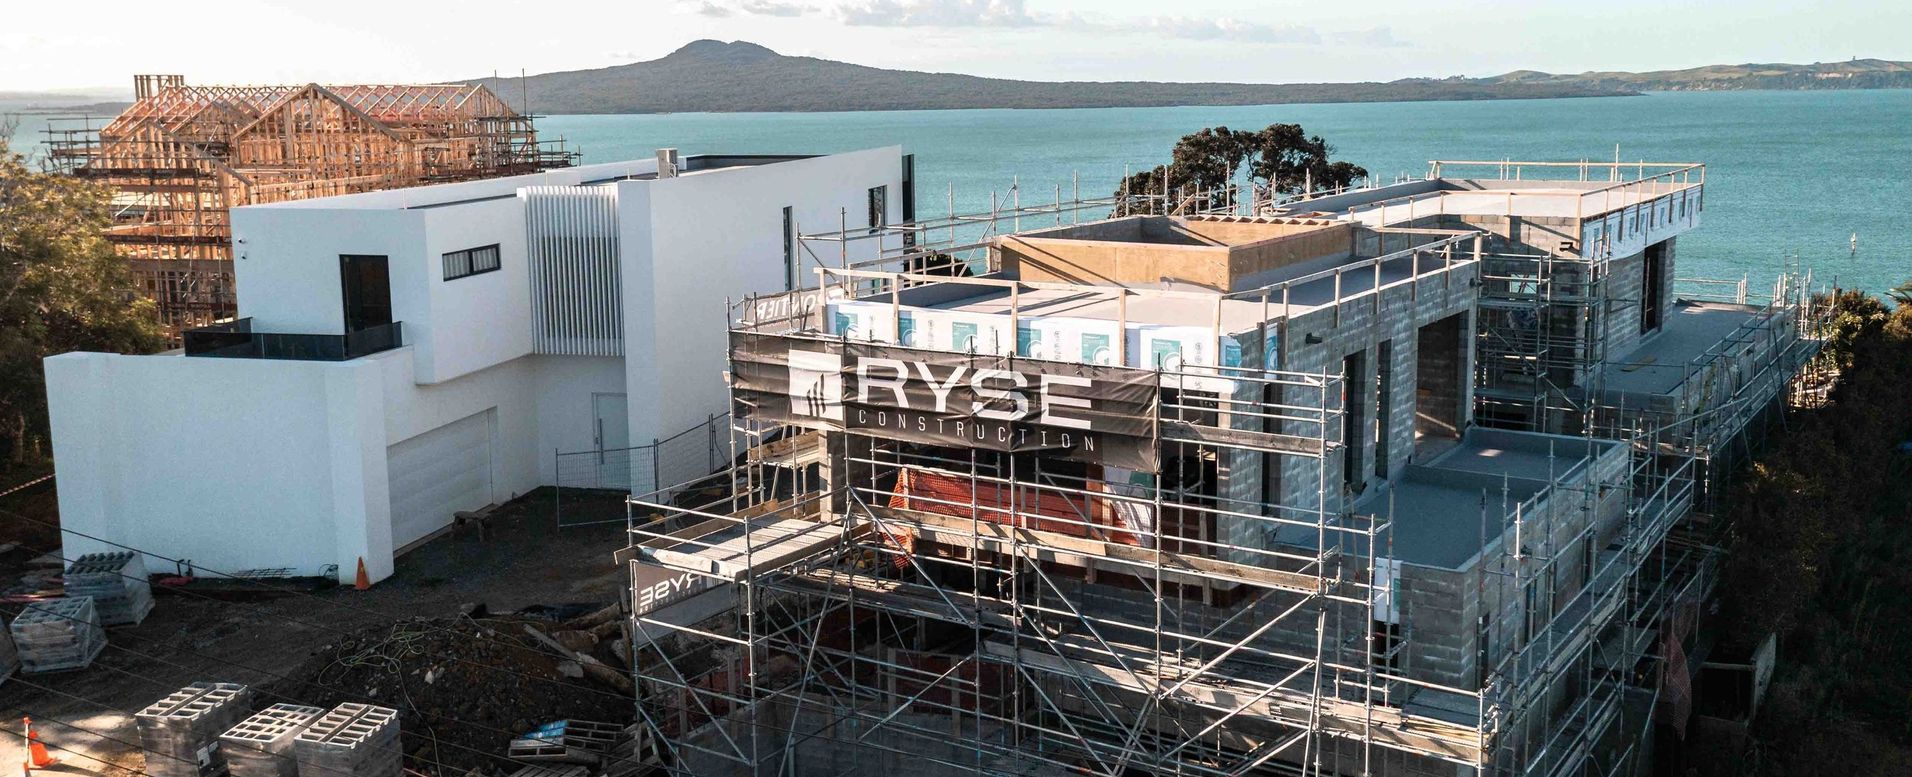 Ryse Construction Banner image